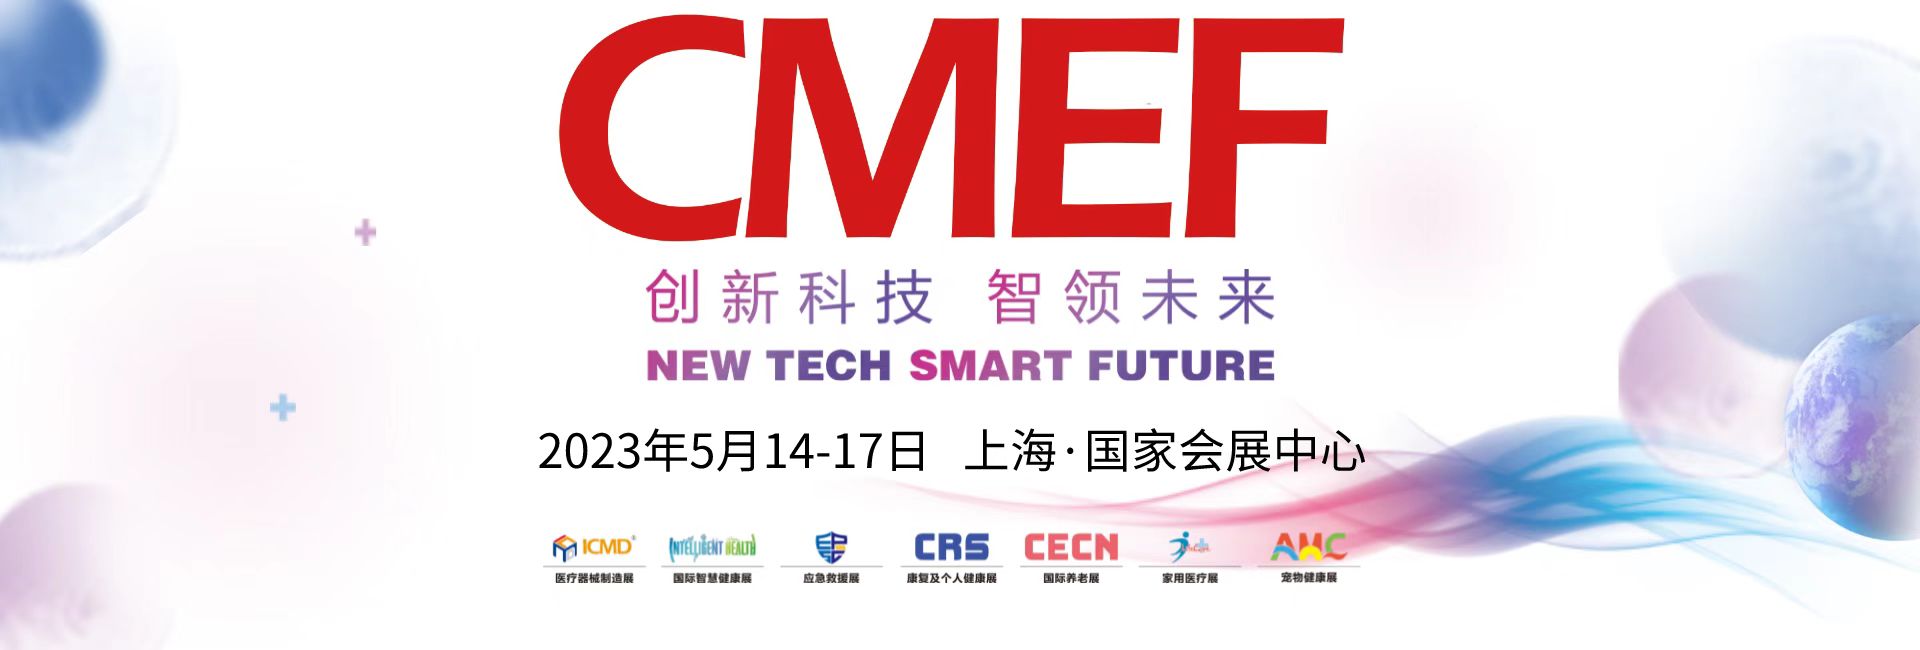 CMEF2023中国国际养老产业博览会-CMEF深圳养老康复展区/个人健康康复博览会